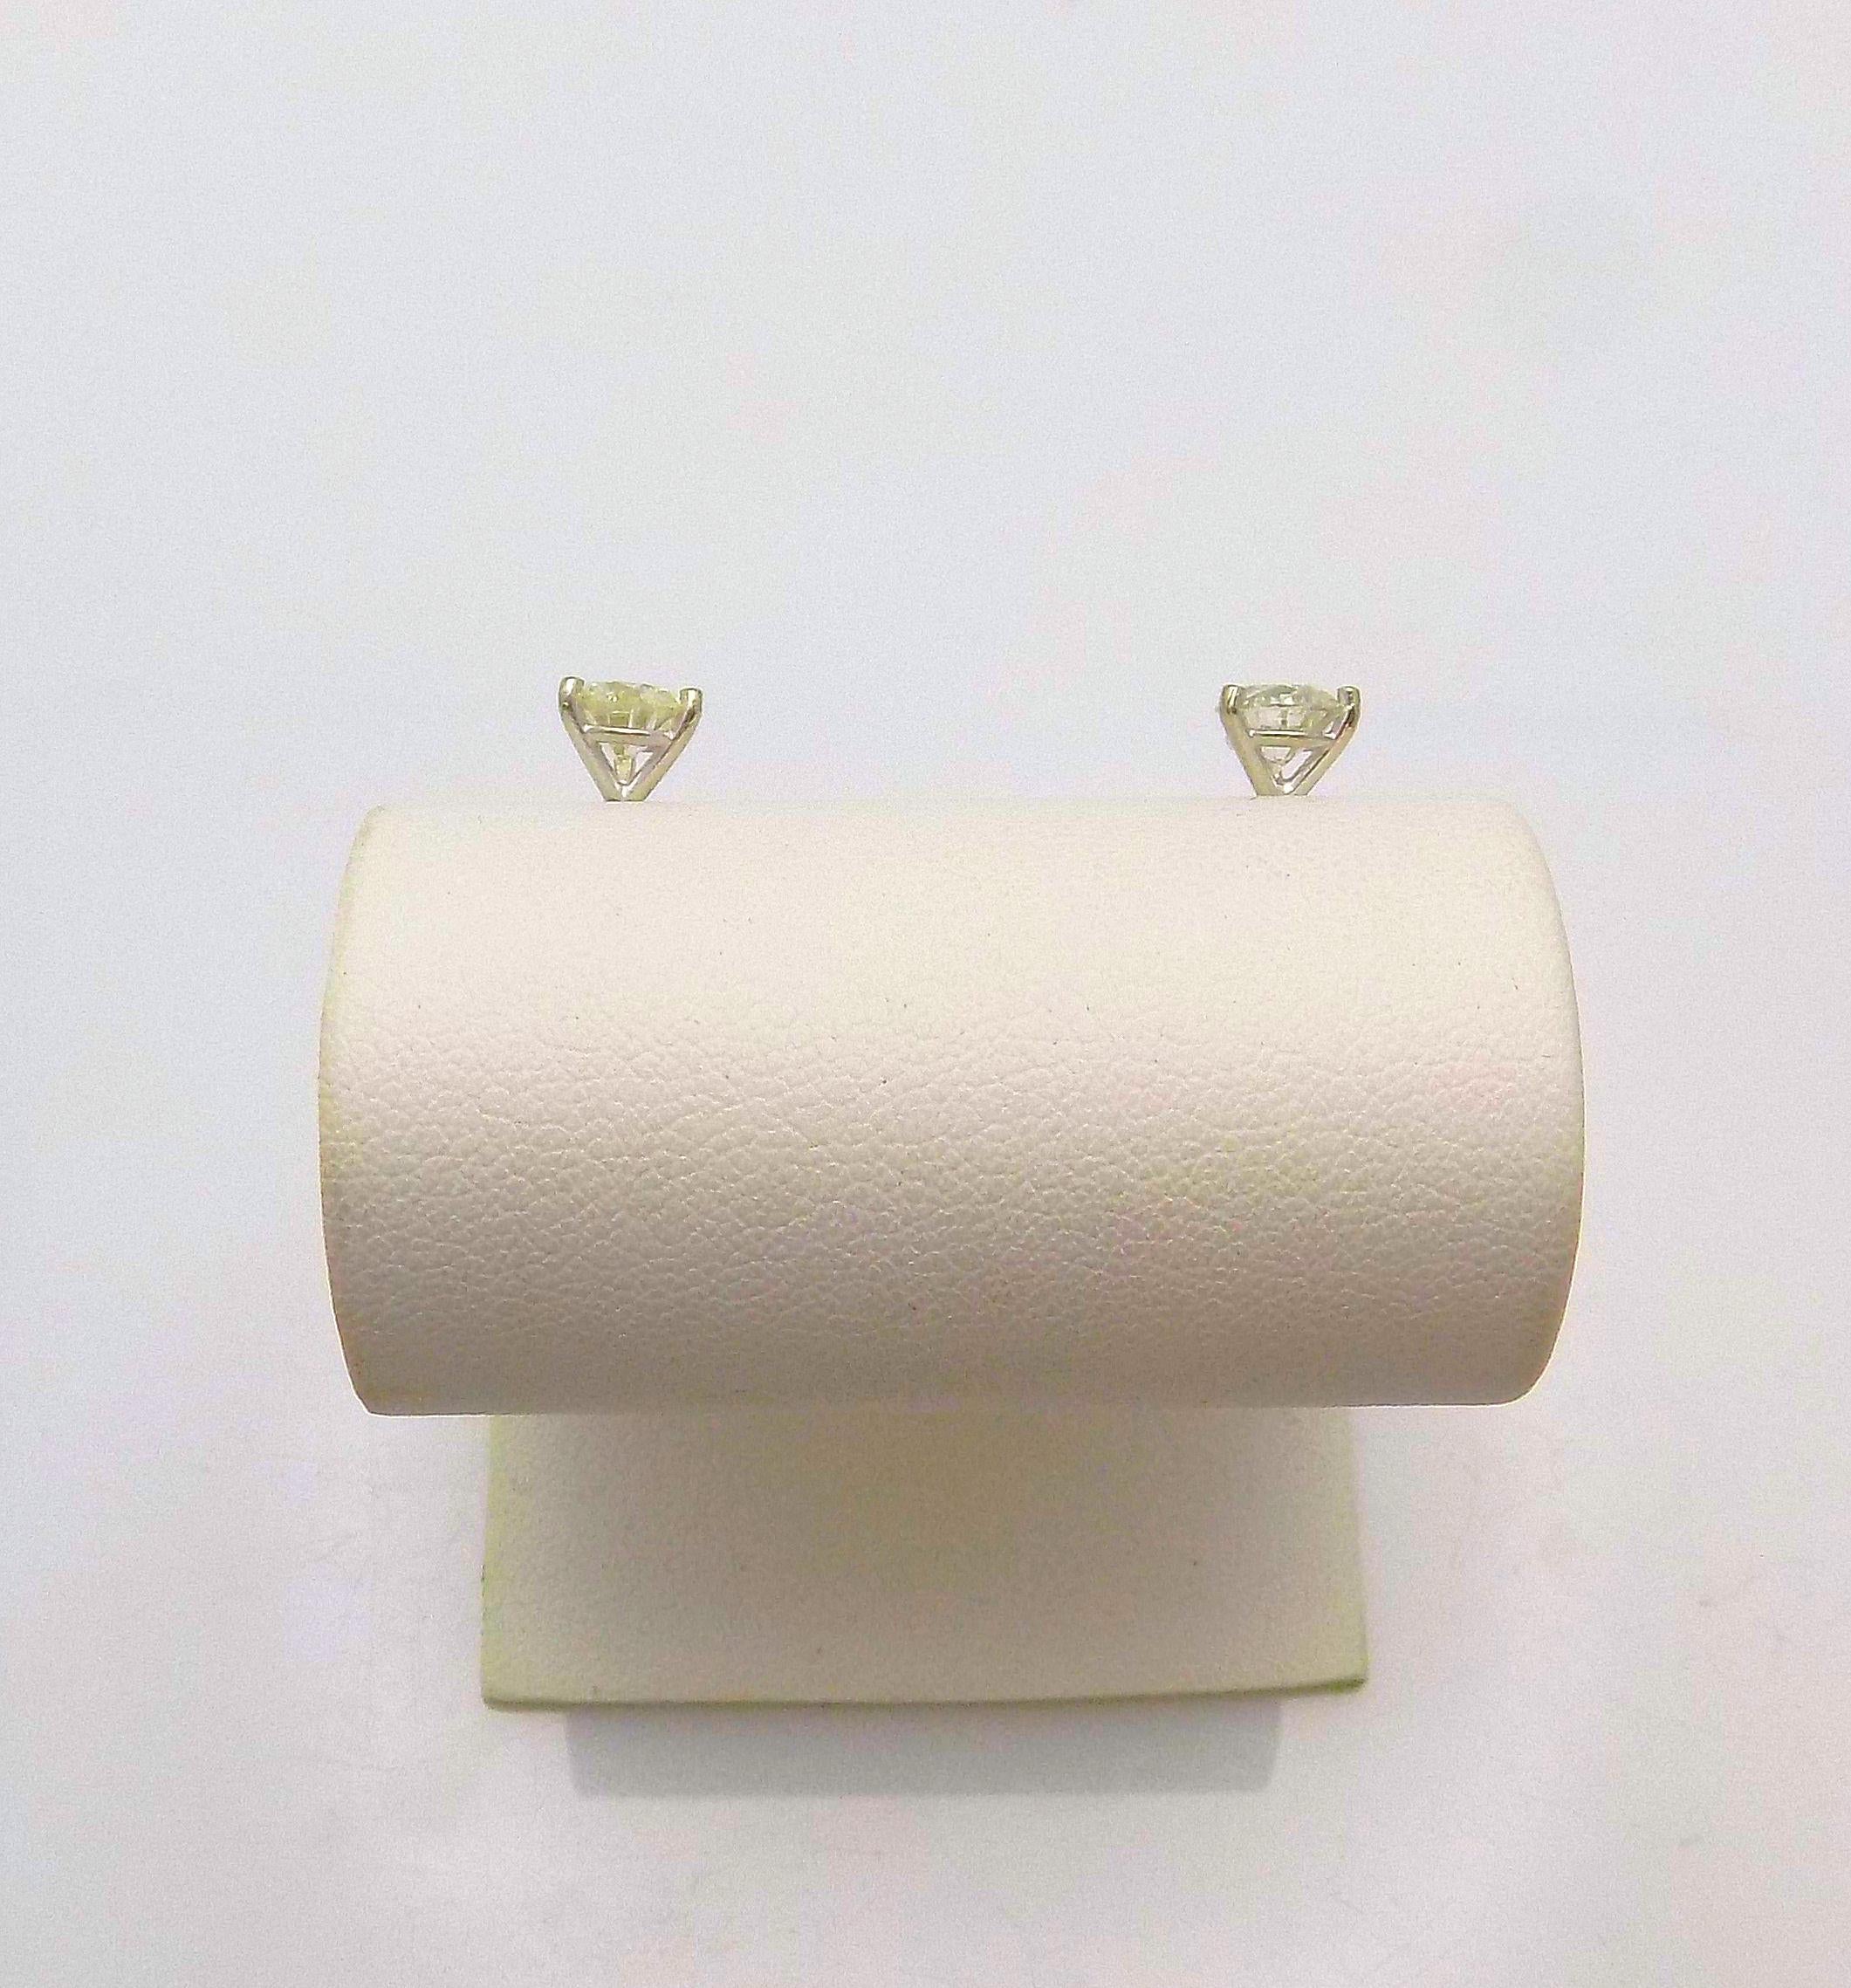 Pair 14 Karat White Gold Diamond Earrings, Martini Setting featuring 2 Round Brilliant Diamonds 1.60 Carat Total Weight; SI-3, J-K; Sterling Silver Backs, 1.0 DWT or 1.56 Grams.